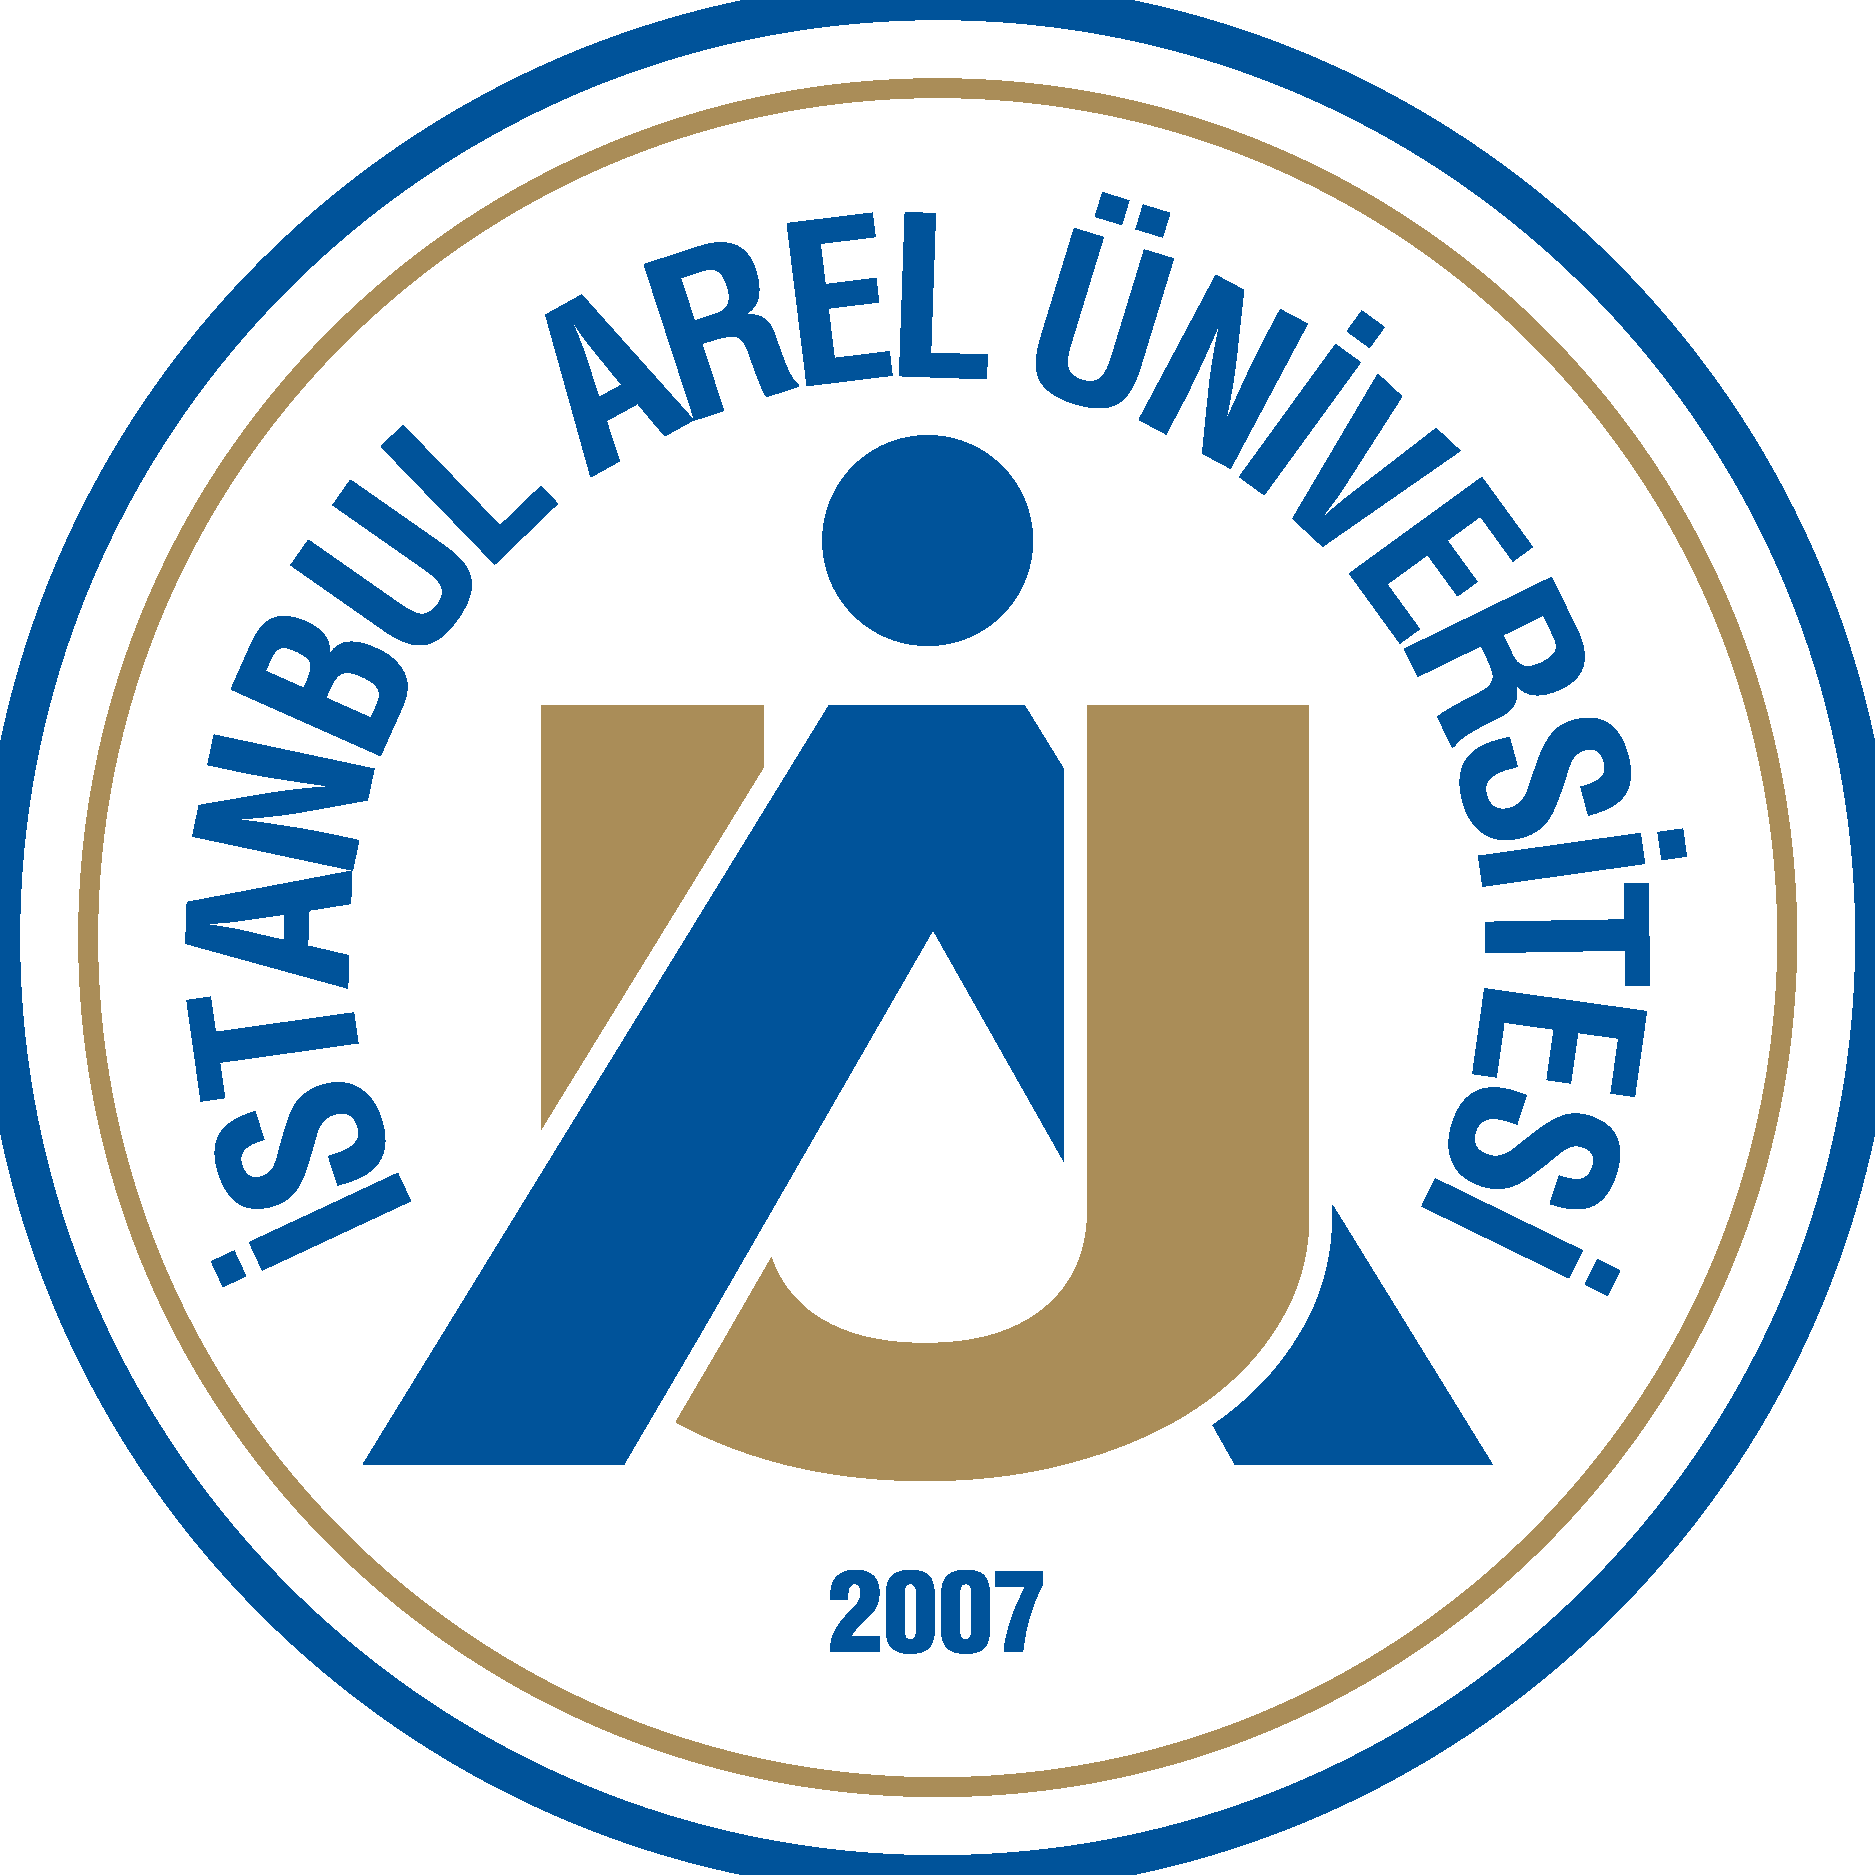 İstanbul Arel university